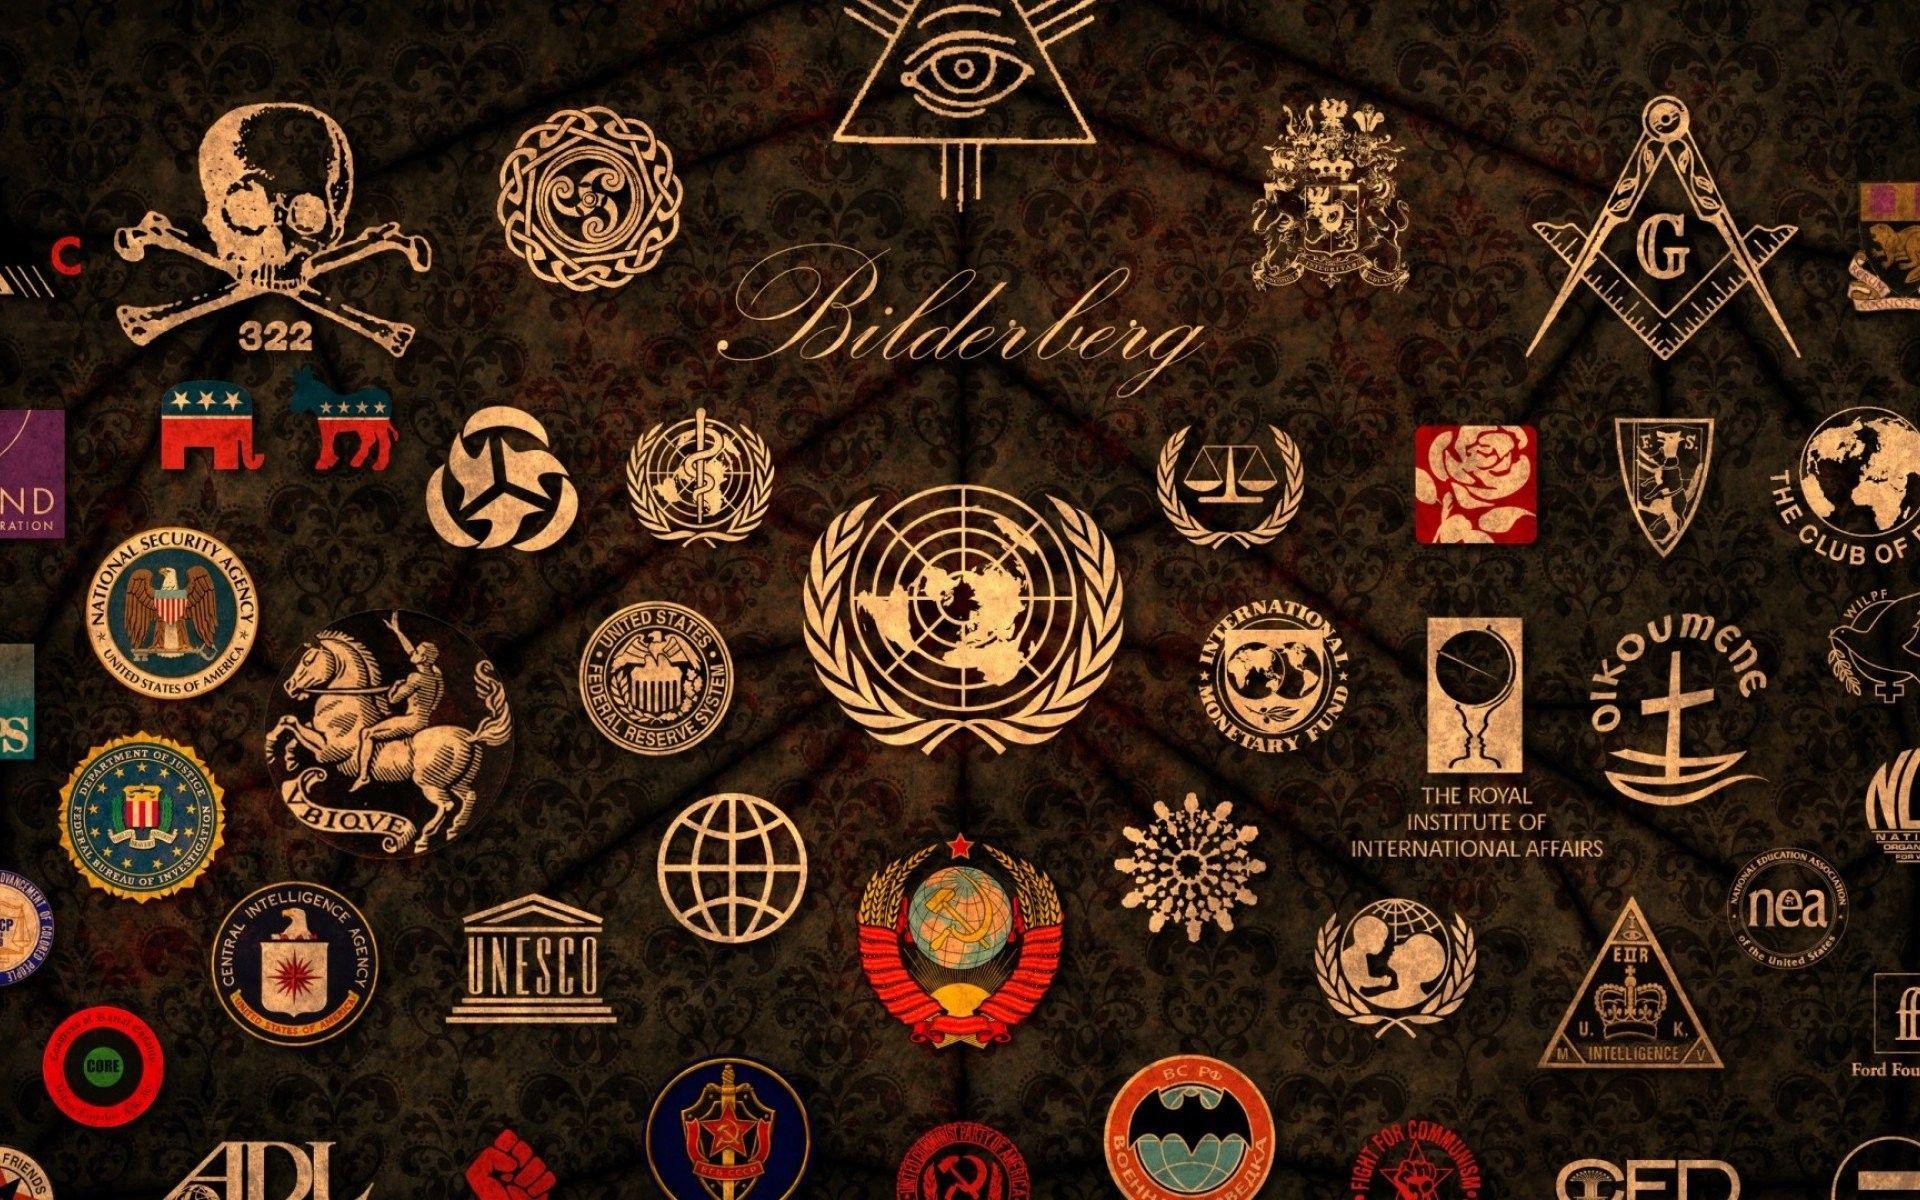 Central Intelligence Agency Wallpaper